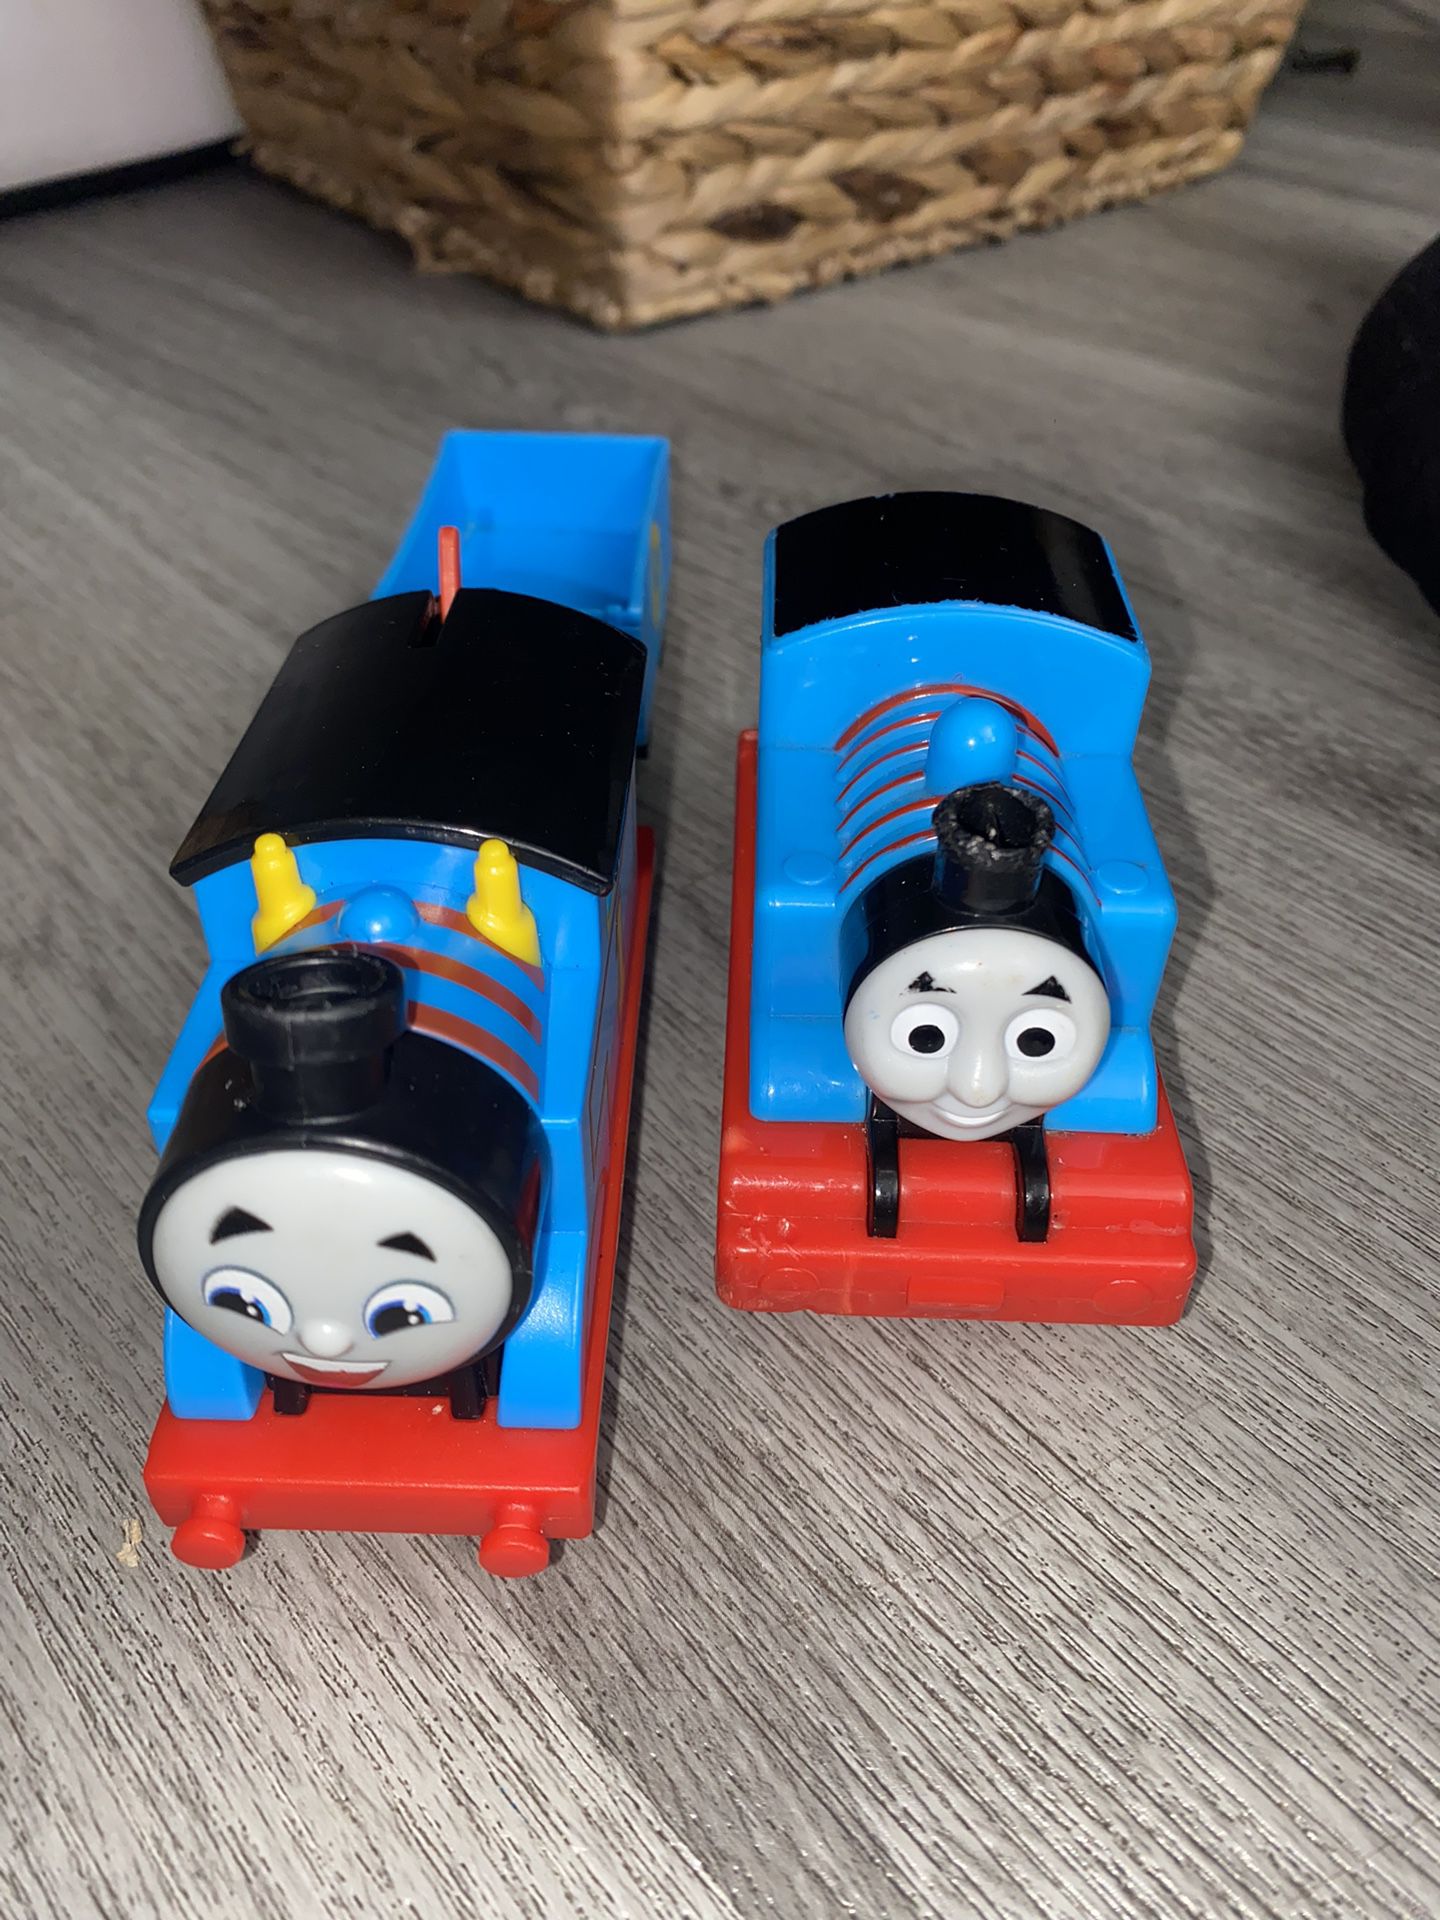 Thomas & Friends Motorized Toy Train